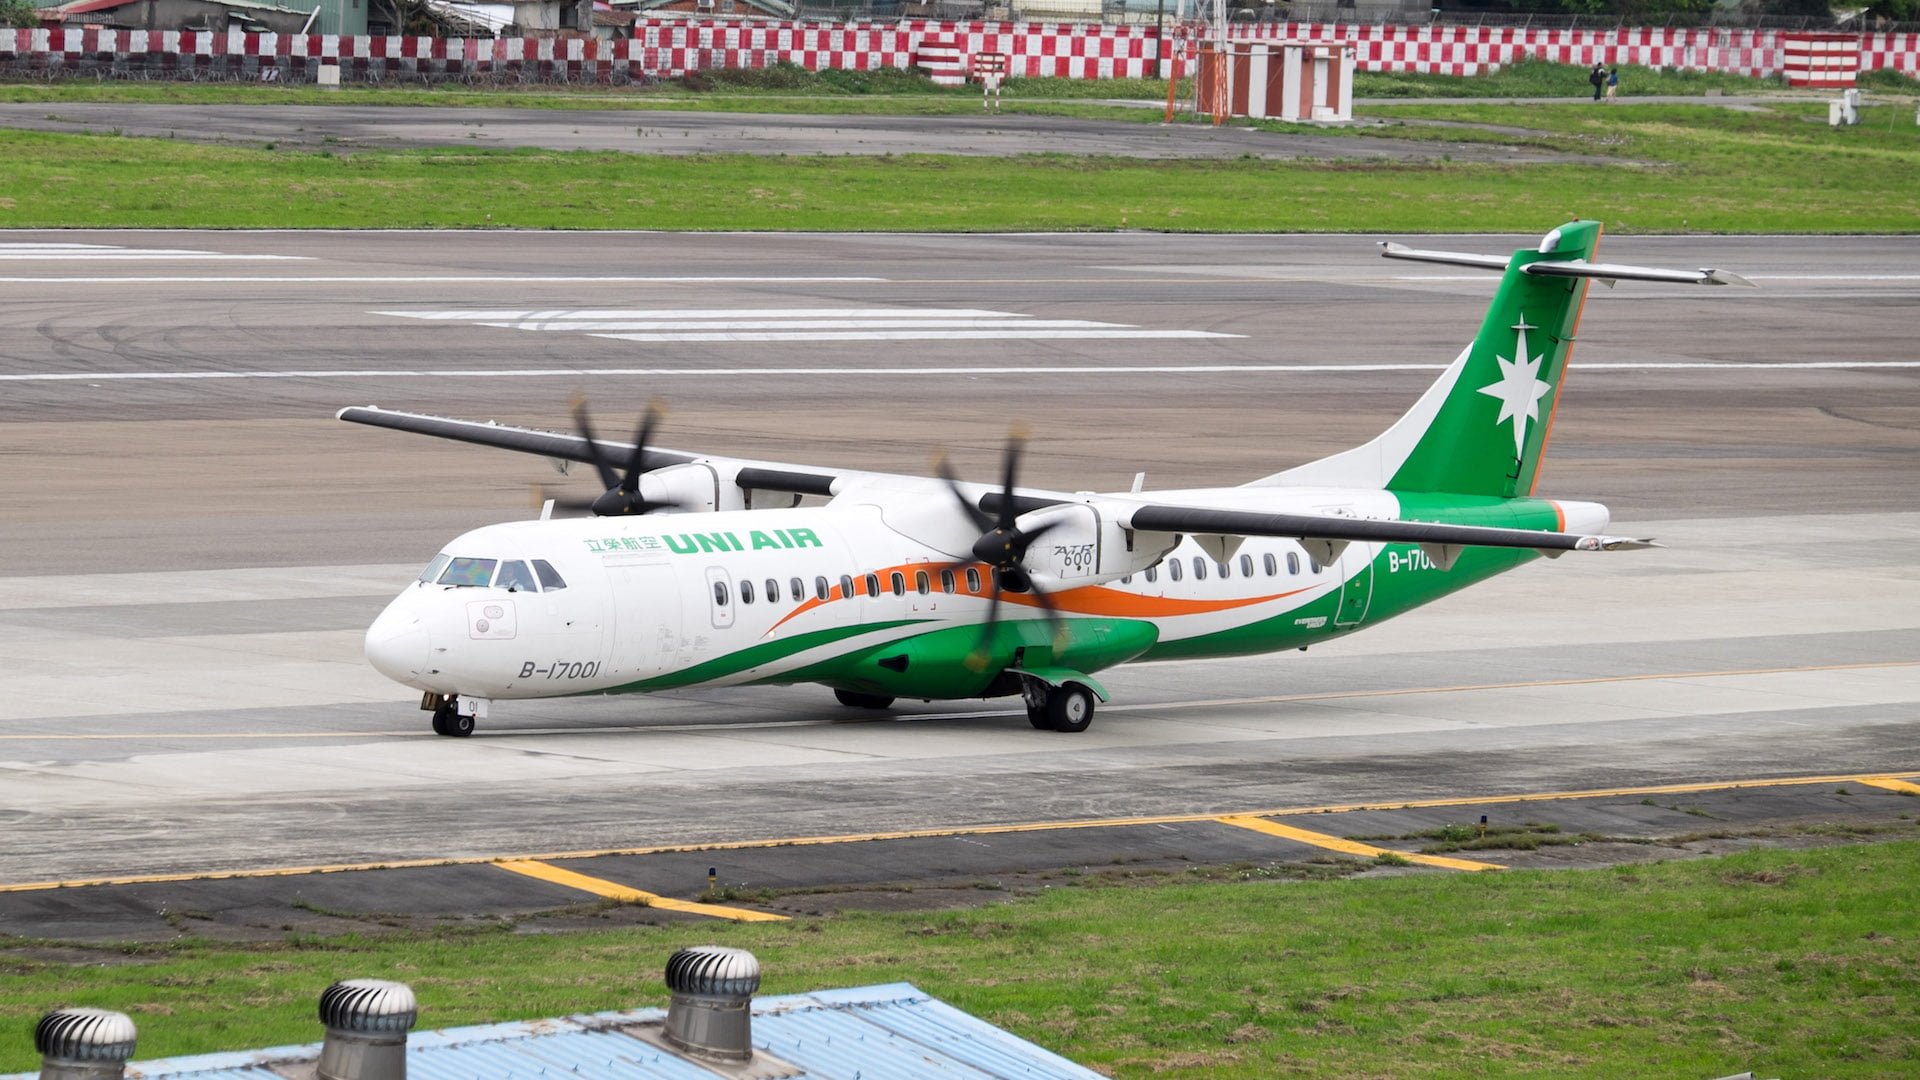 長榮航空旅客憑機票享機上免費無線網路 Free WiFi Onboard UNI Air ATR 72 600 B 17001 Departing from Taipei Songshan Airport